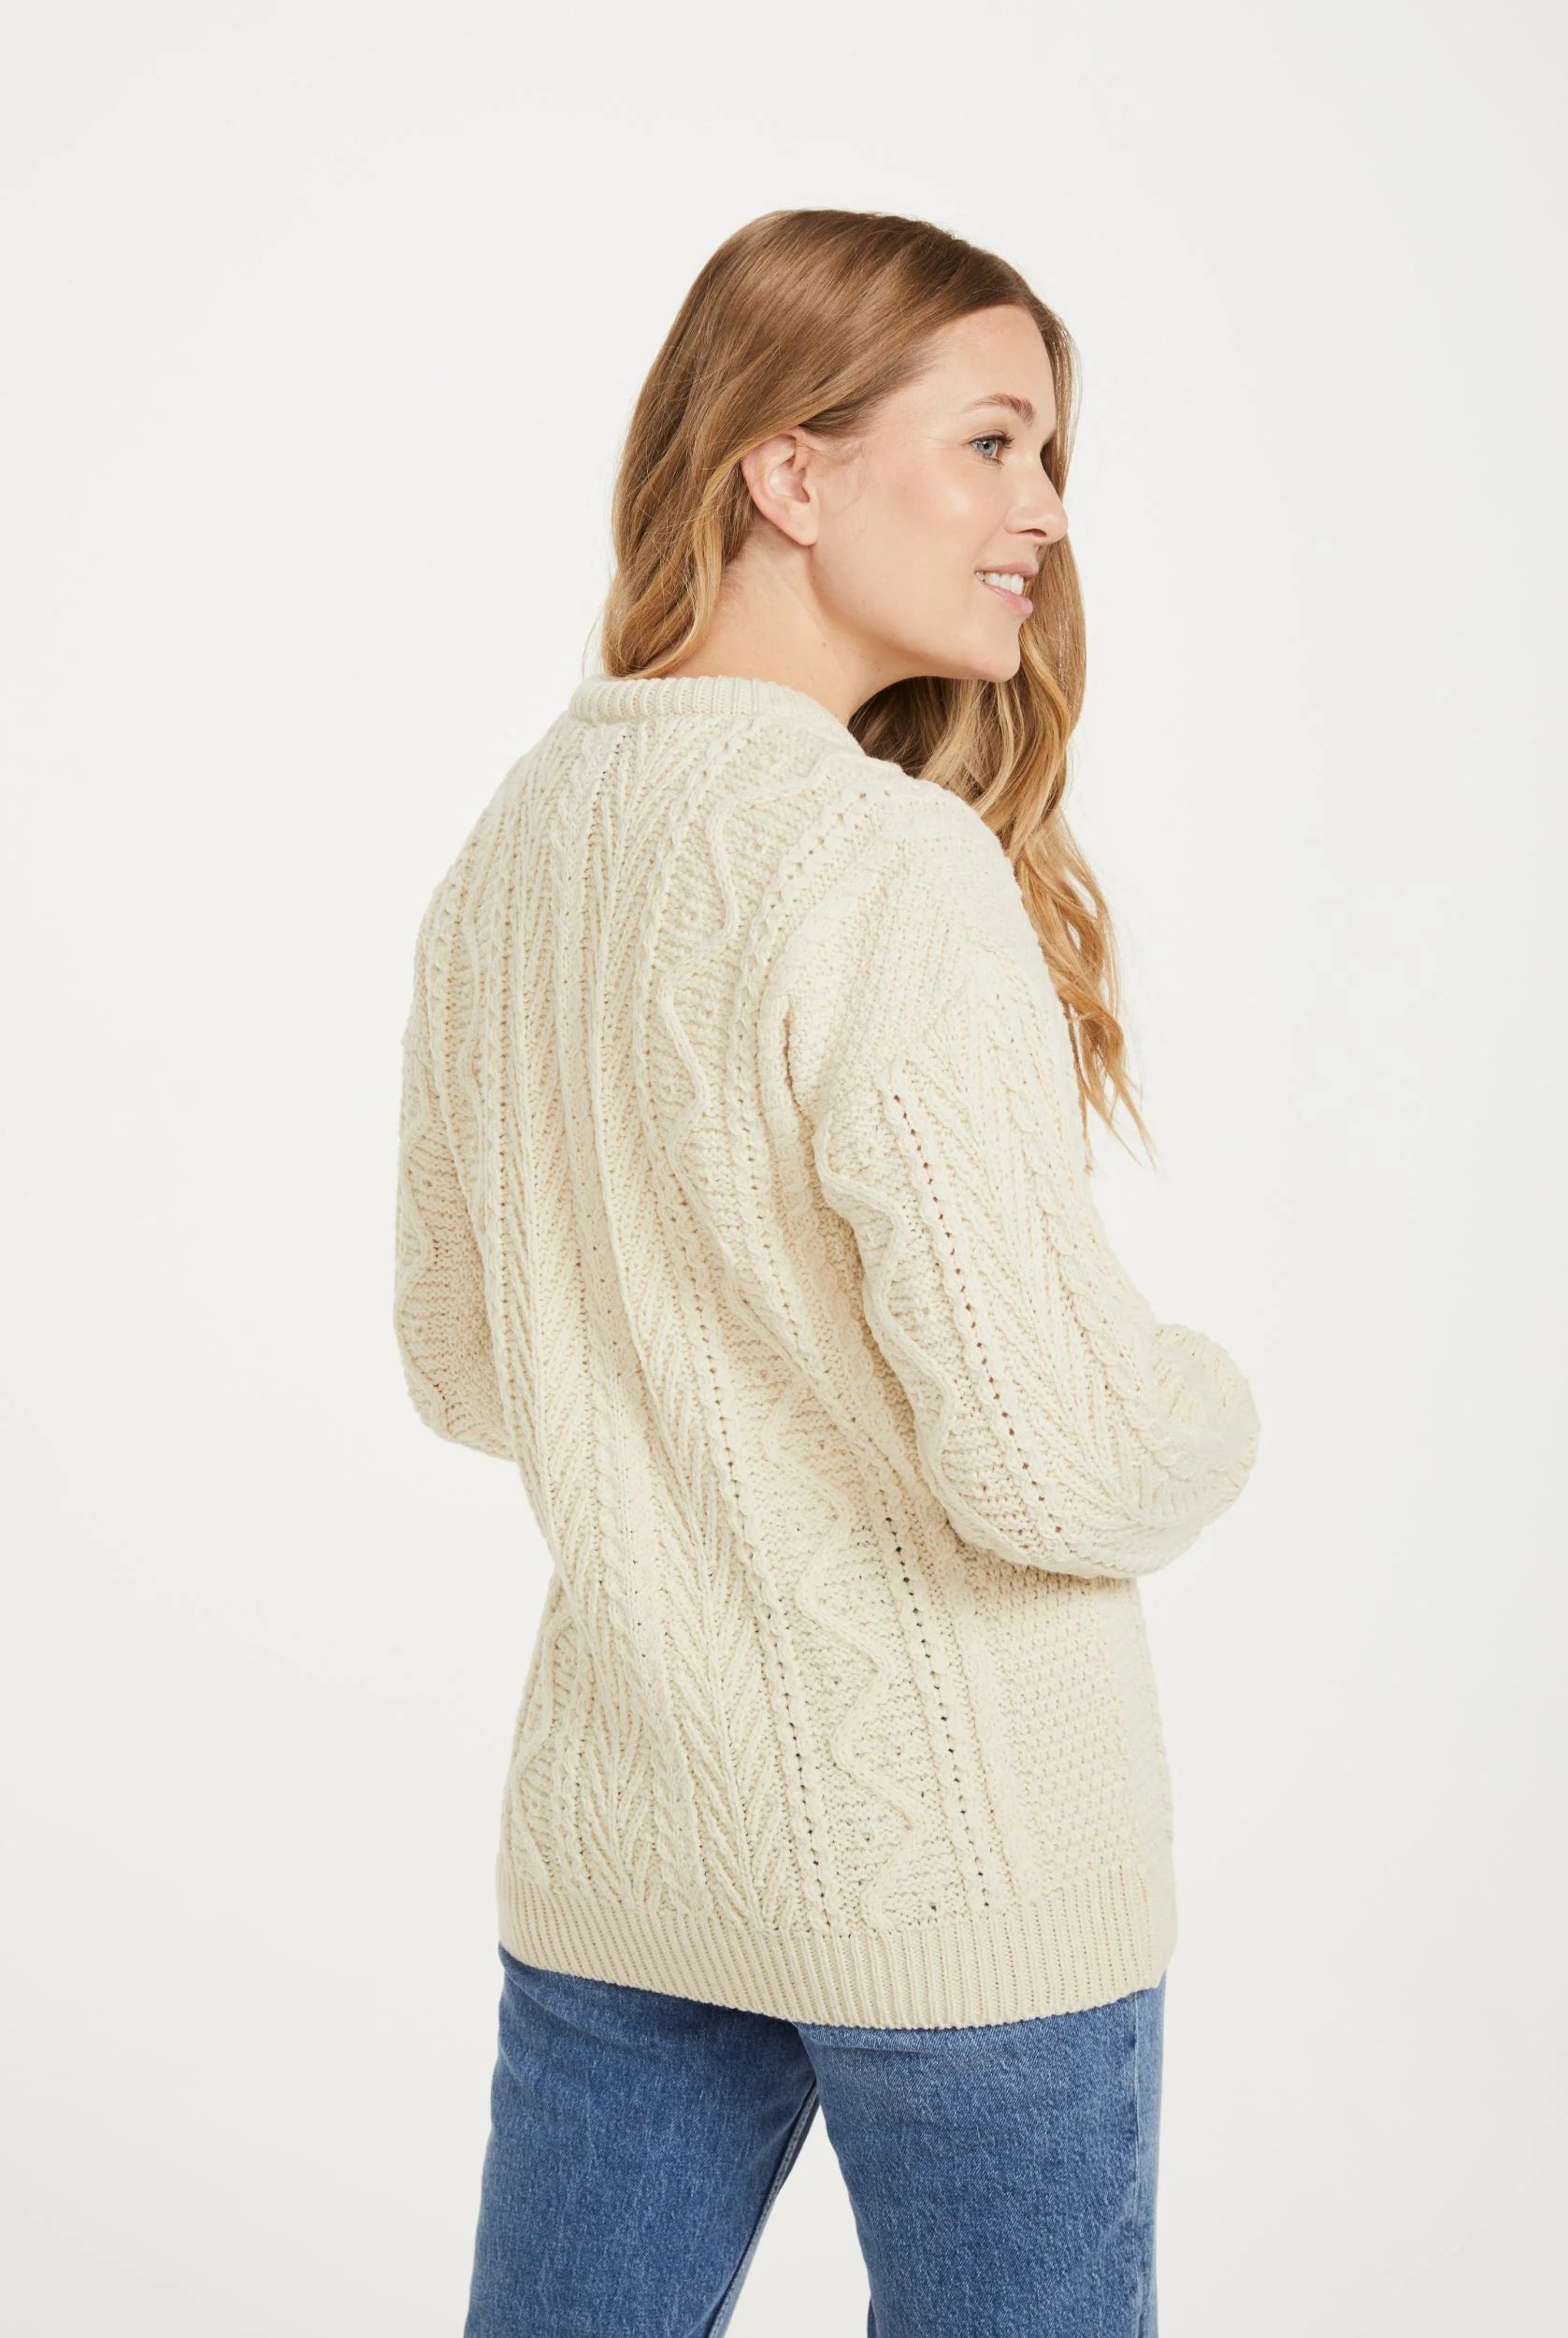 Newgrange Traditional Ladies Aran Sweater - Cream B223